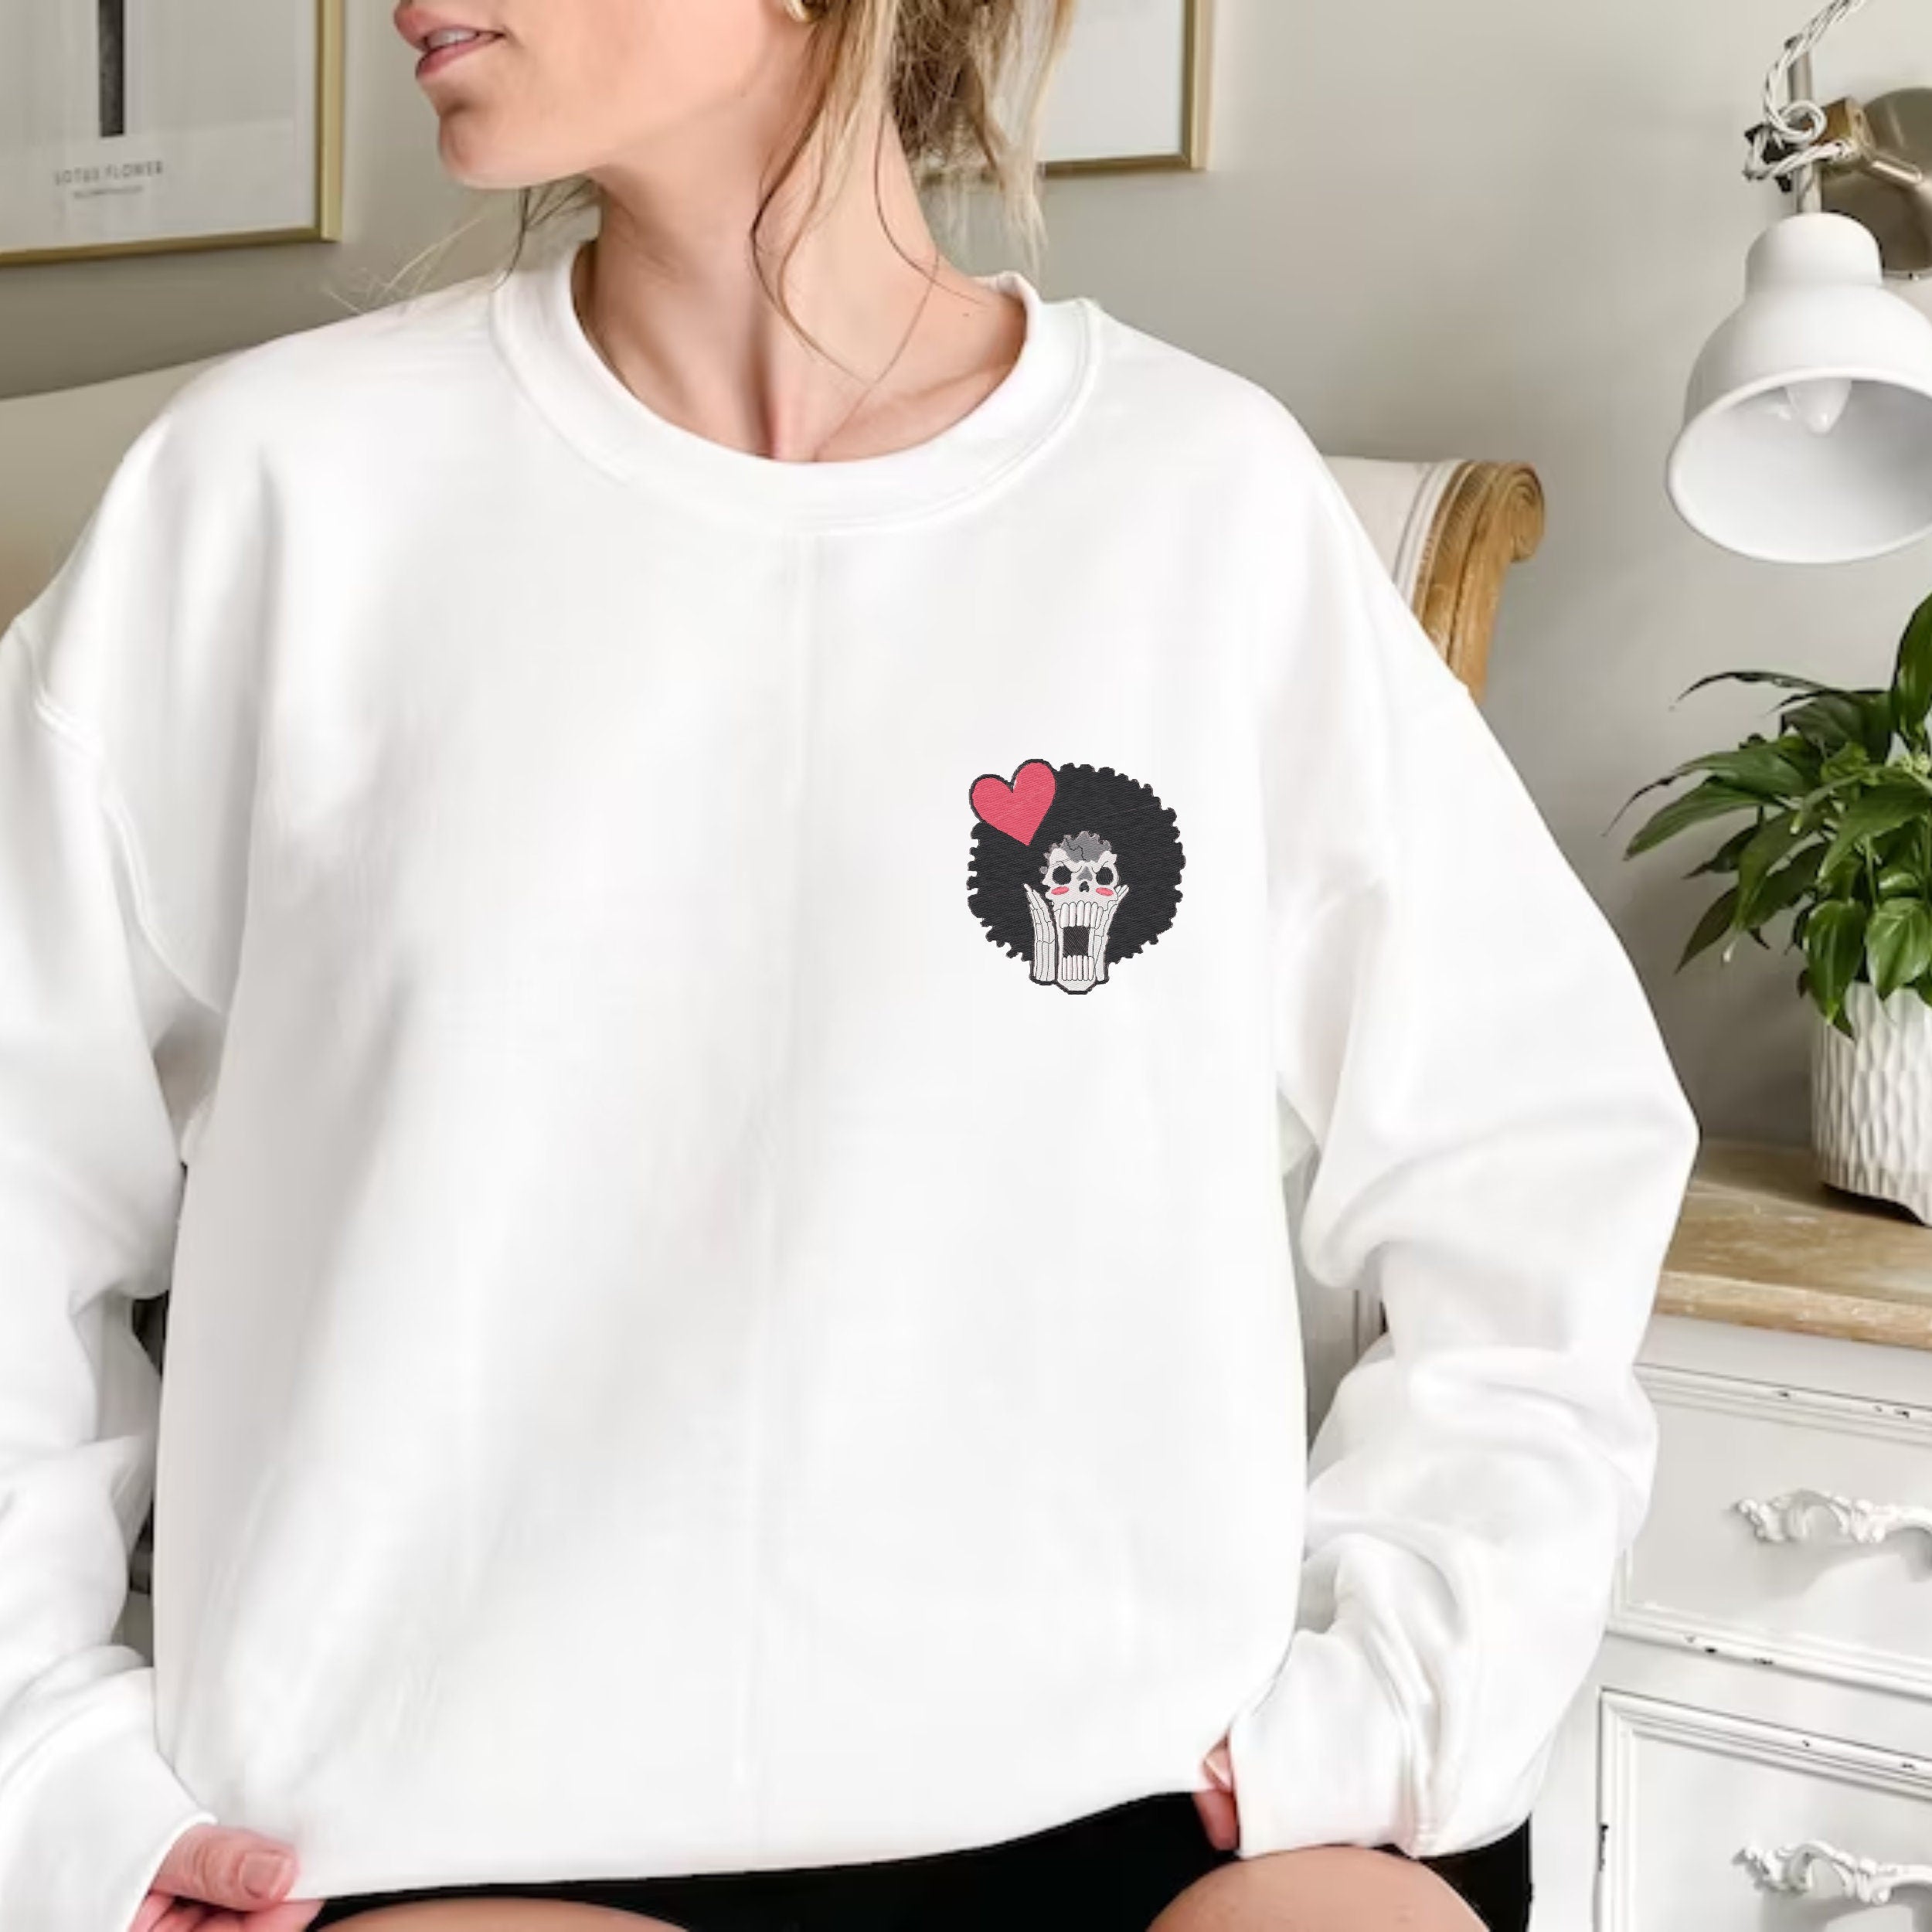 Girl's Cute Anime Style Sweater or Shirt Cat Hoodie Kawaii Fashion | eBay